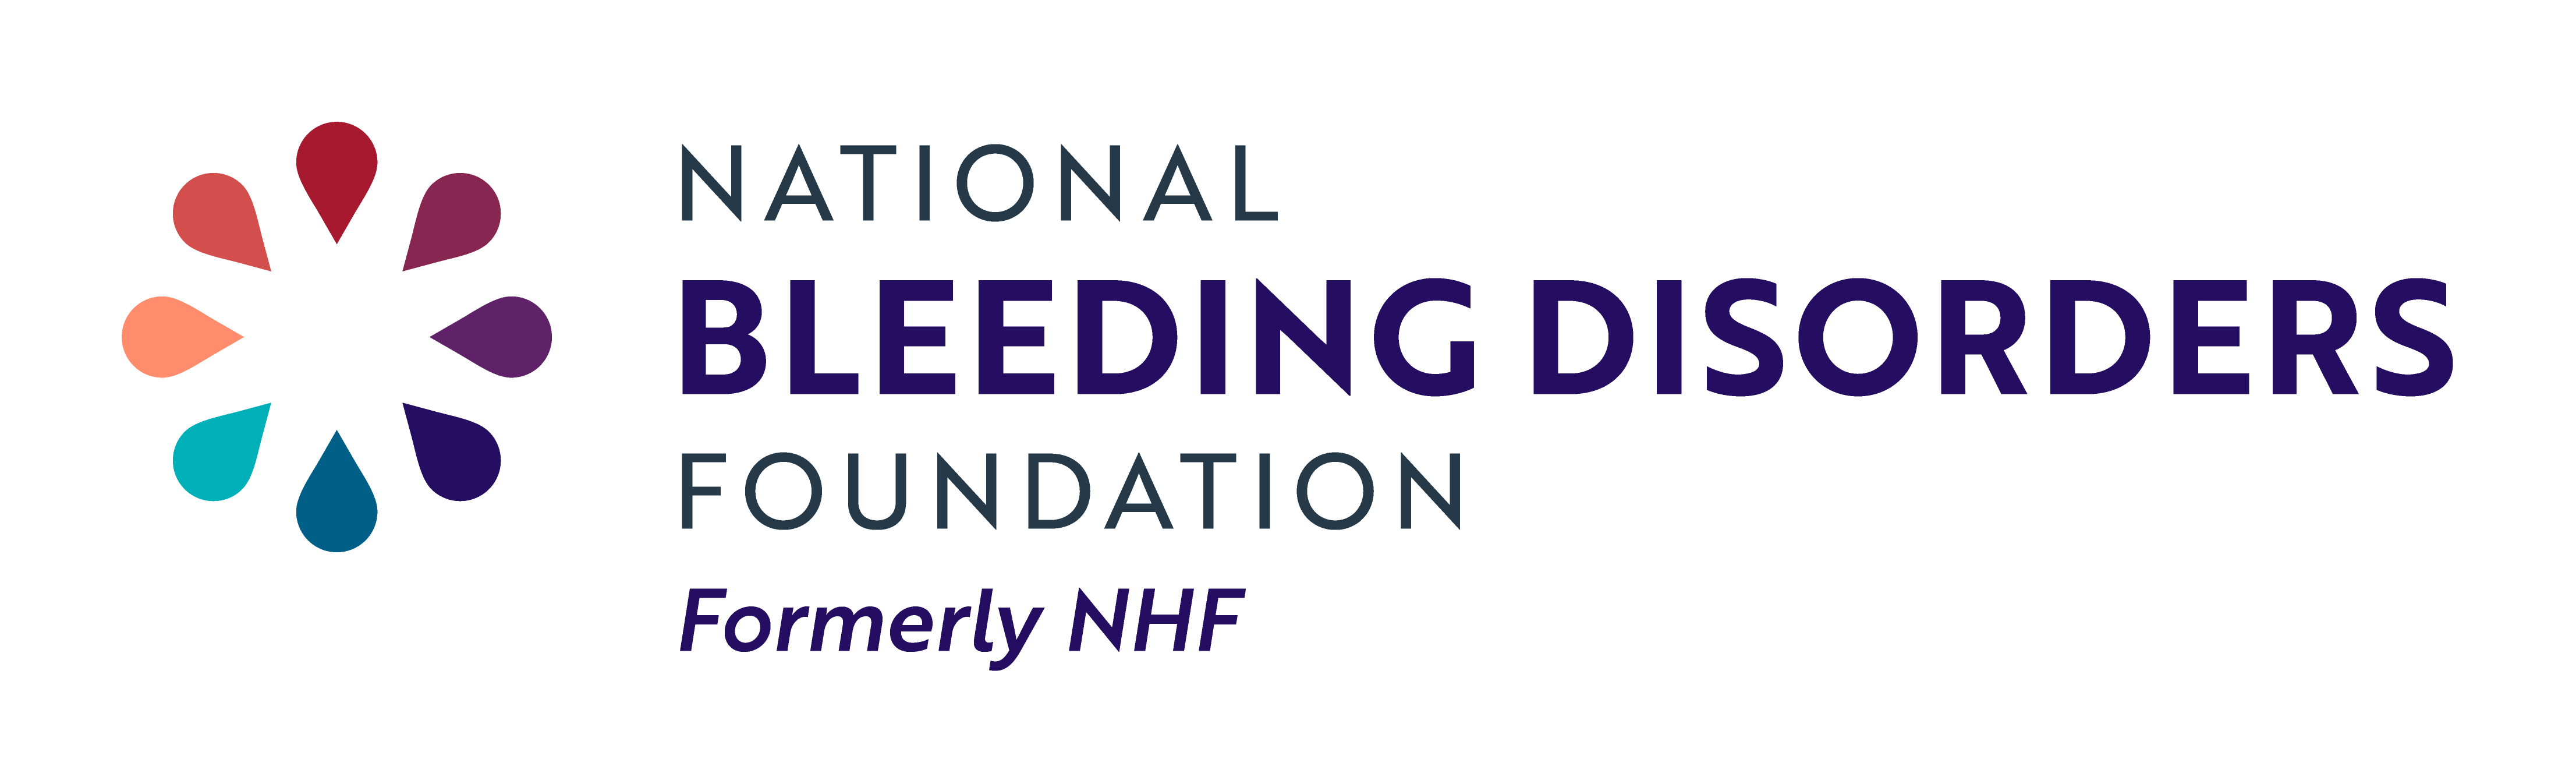 National Bleeding Disorders Foundation | Formerly NHF Logo